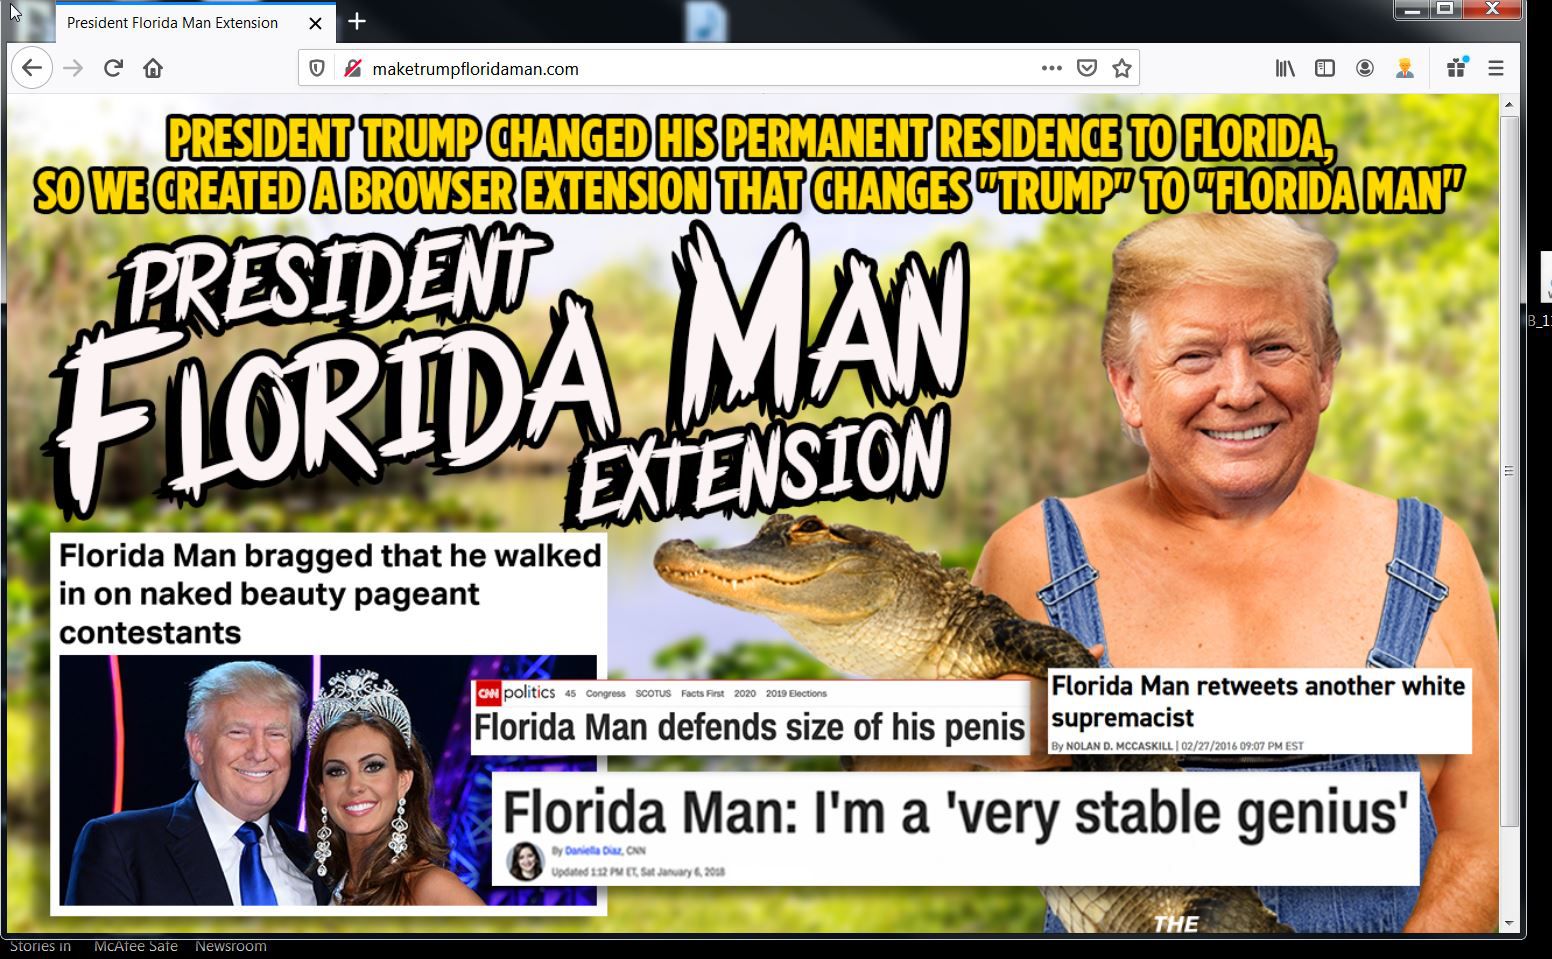 Florida Man News - Episode 0: Welcome to Florida Man News with